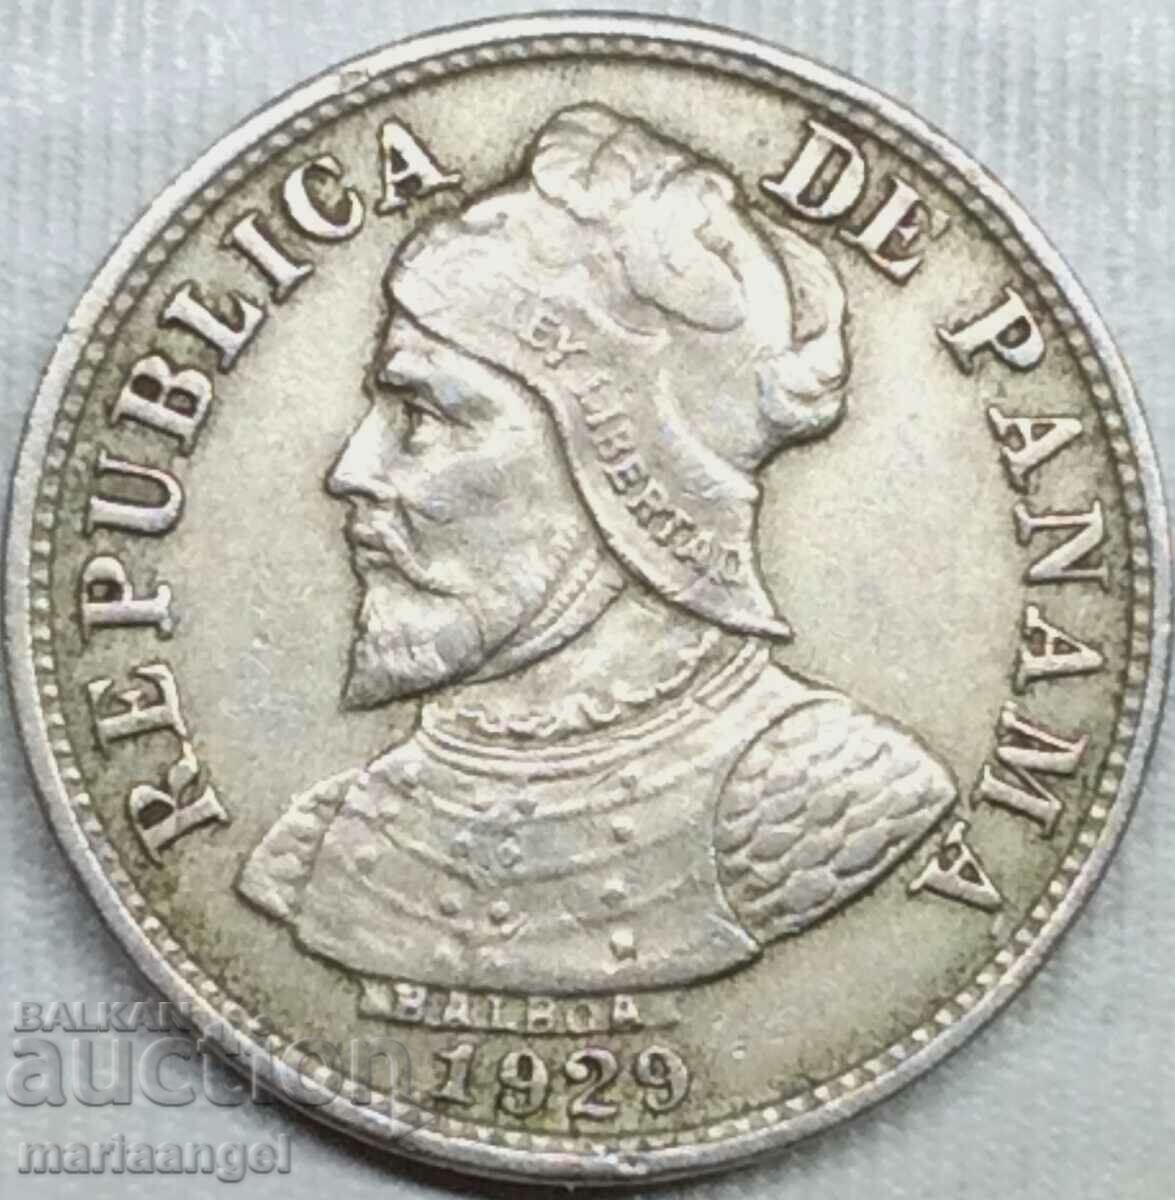 Panama 1929 2 1/2 centimos di Balboa argint